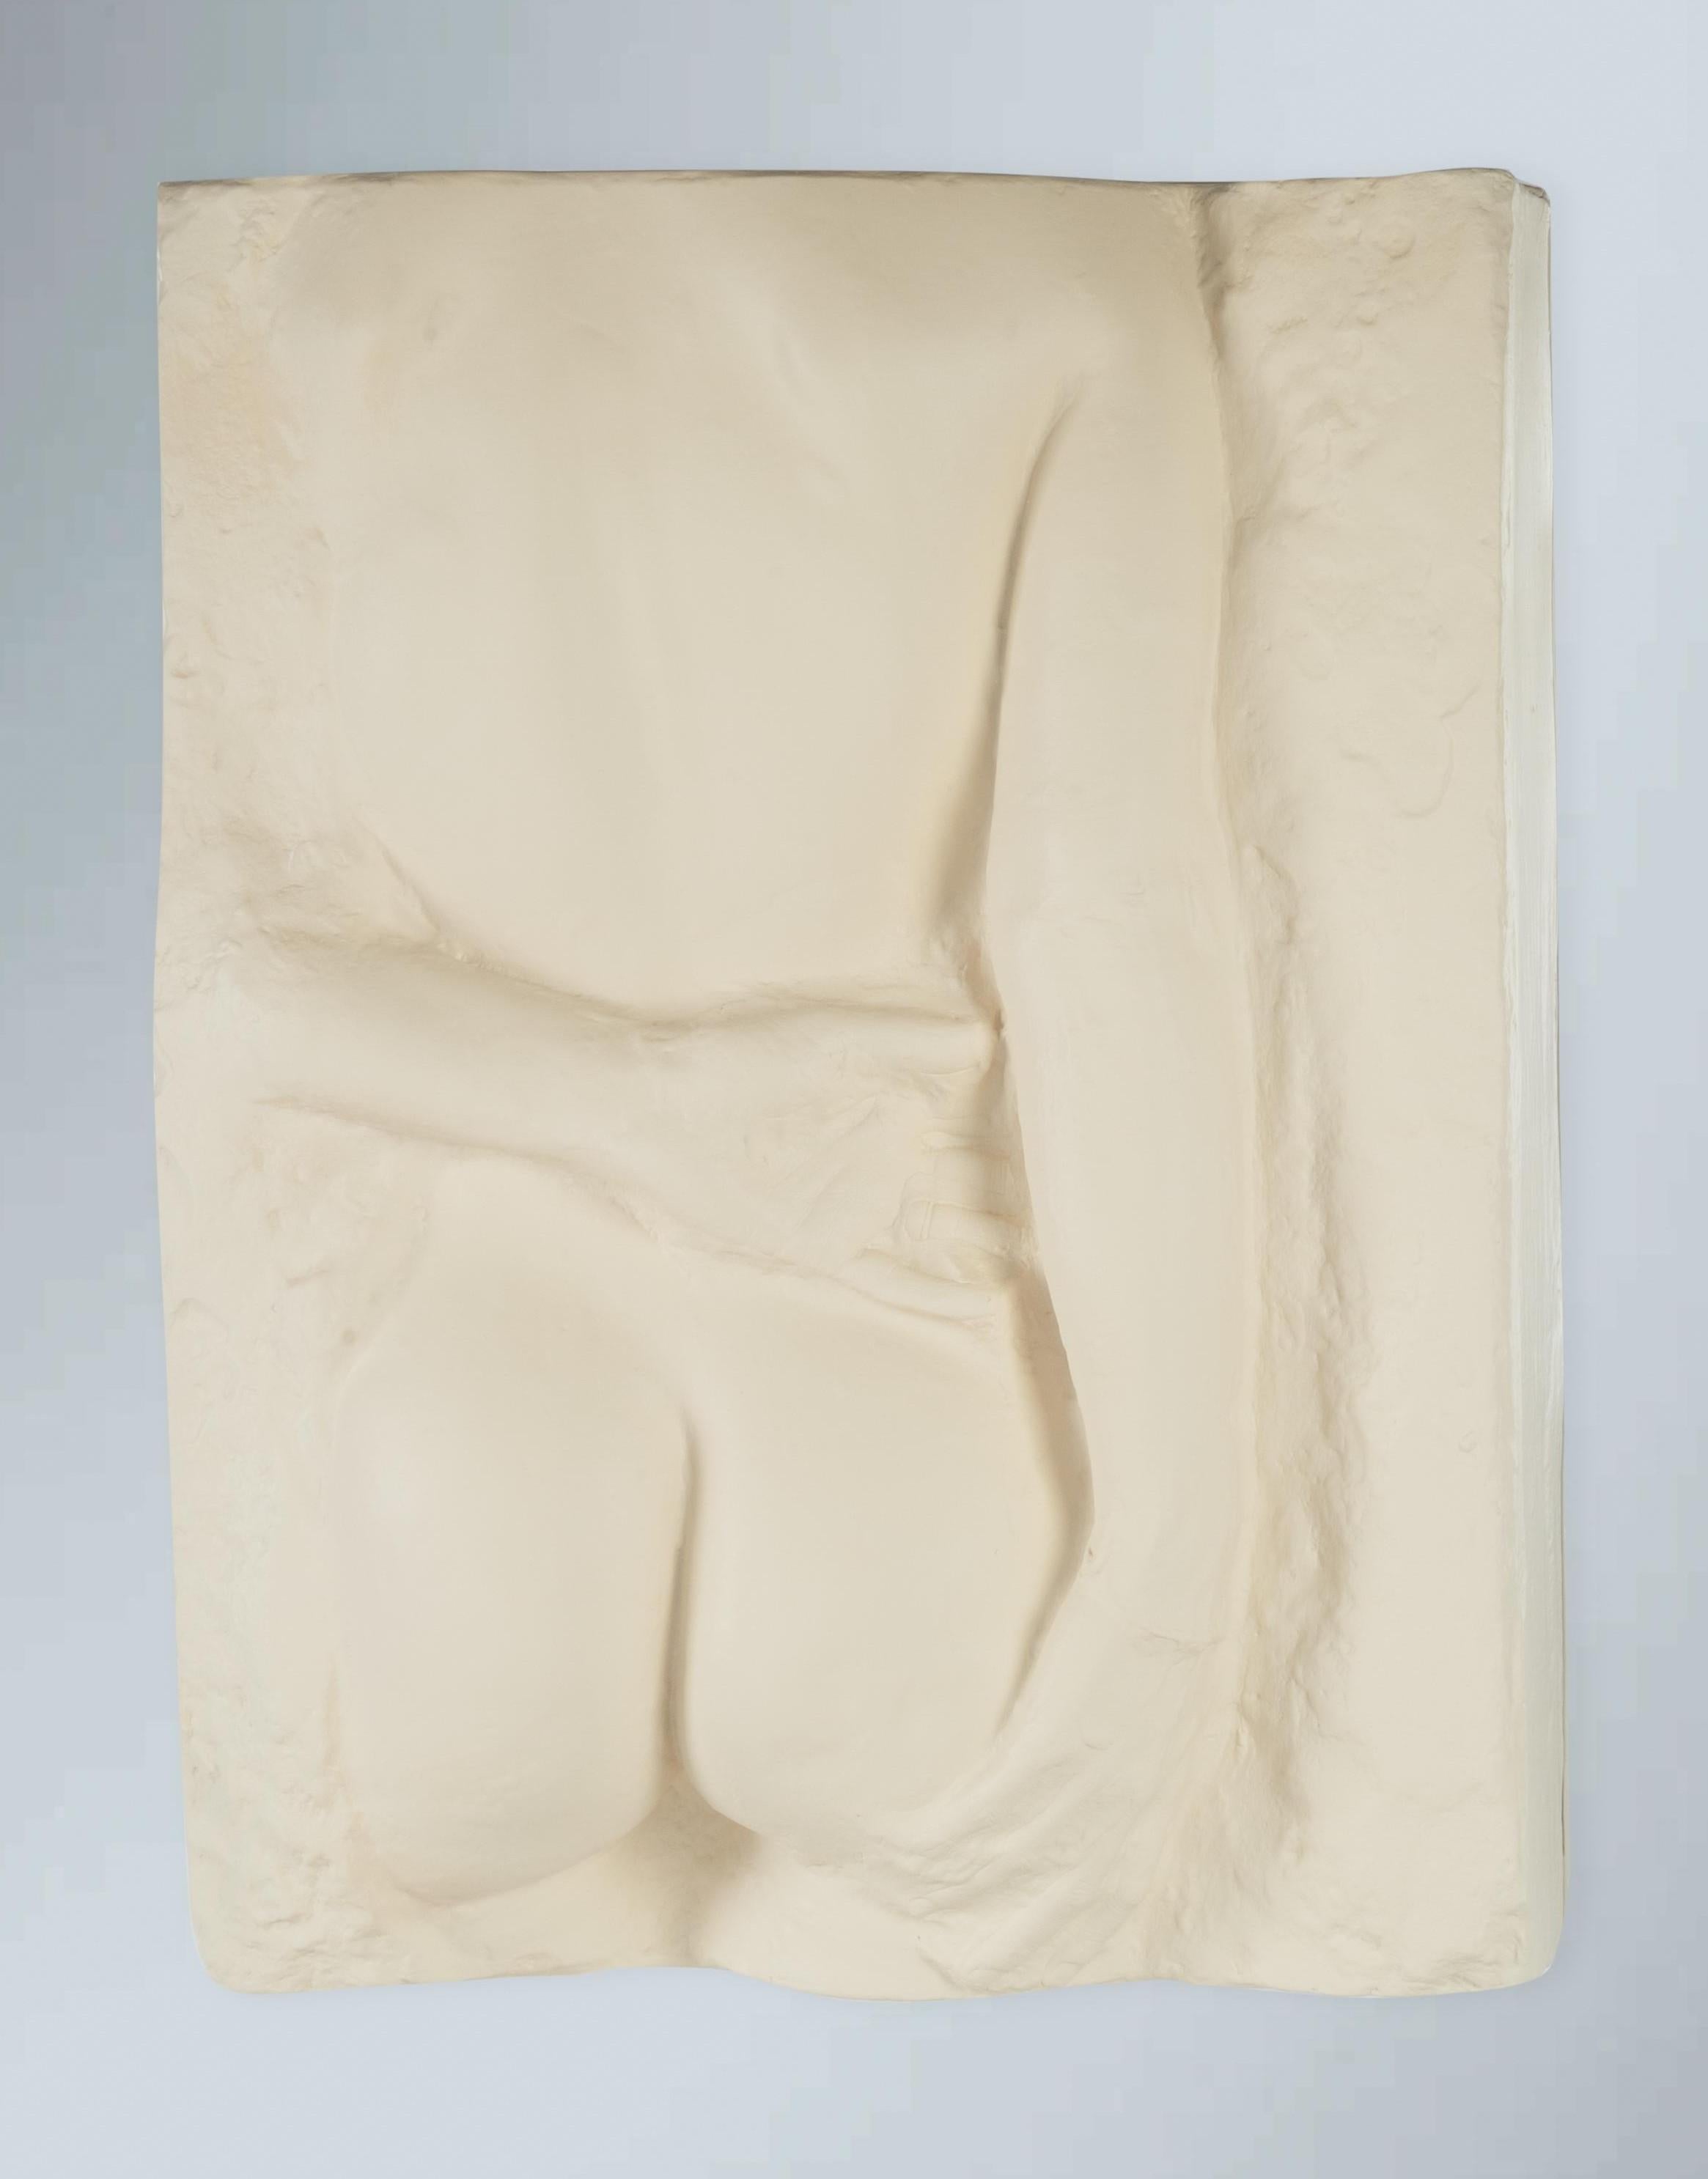 George Segal Nude Sculpture - Gazing Woman